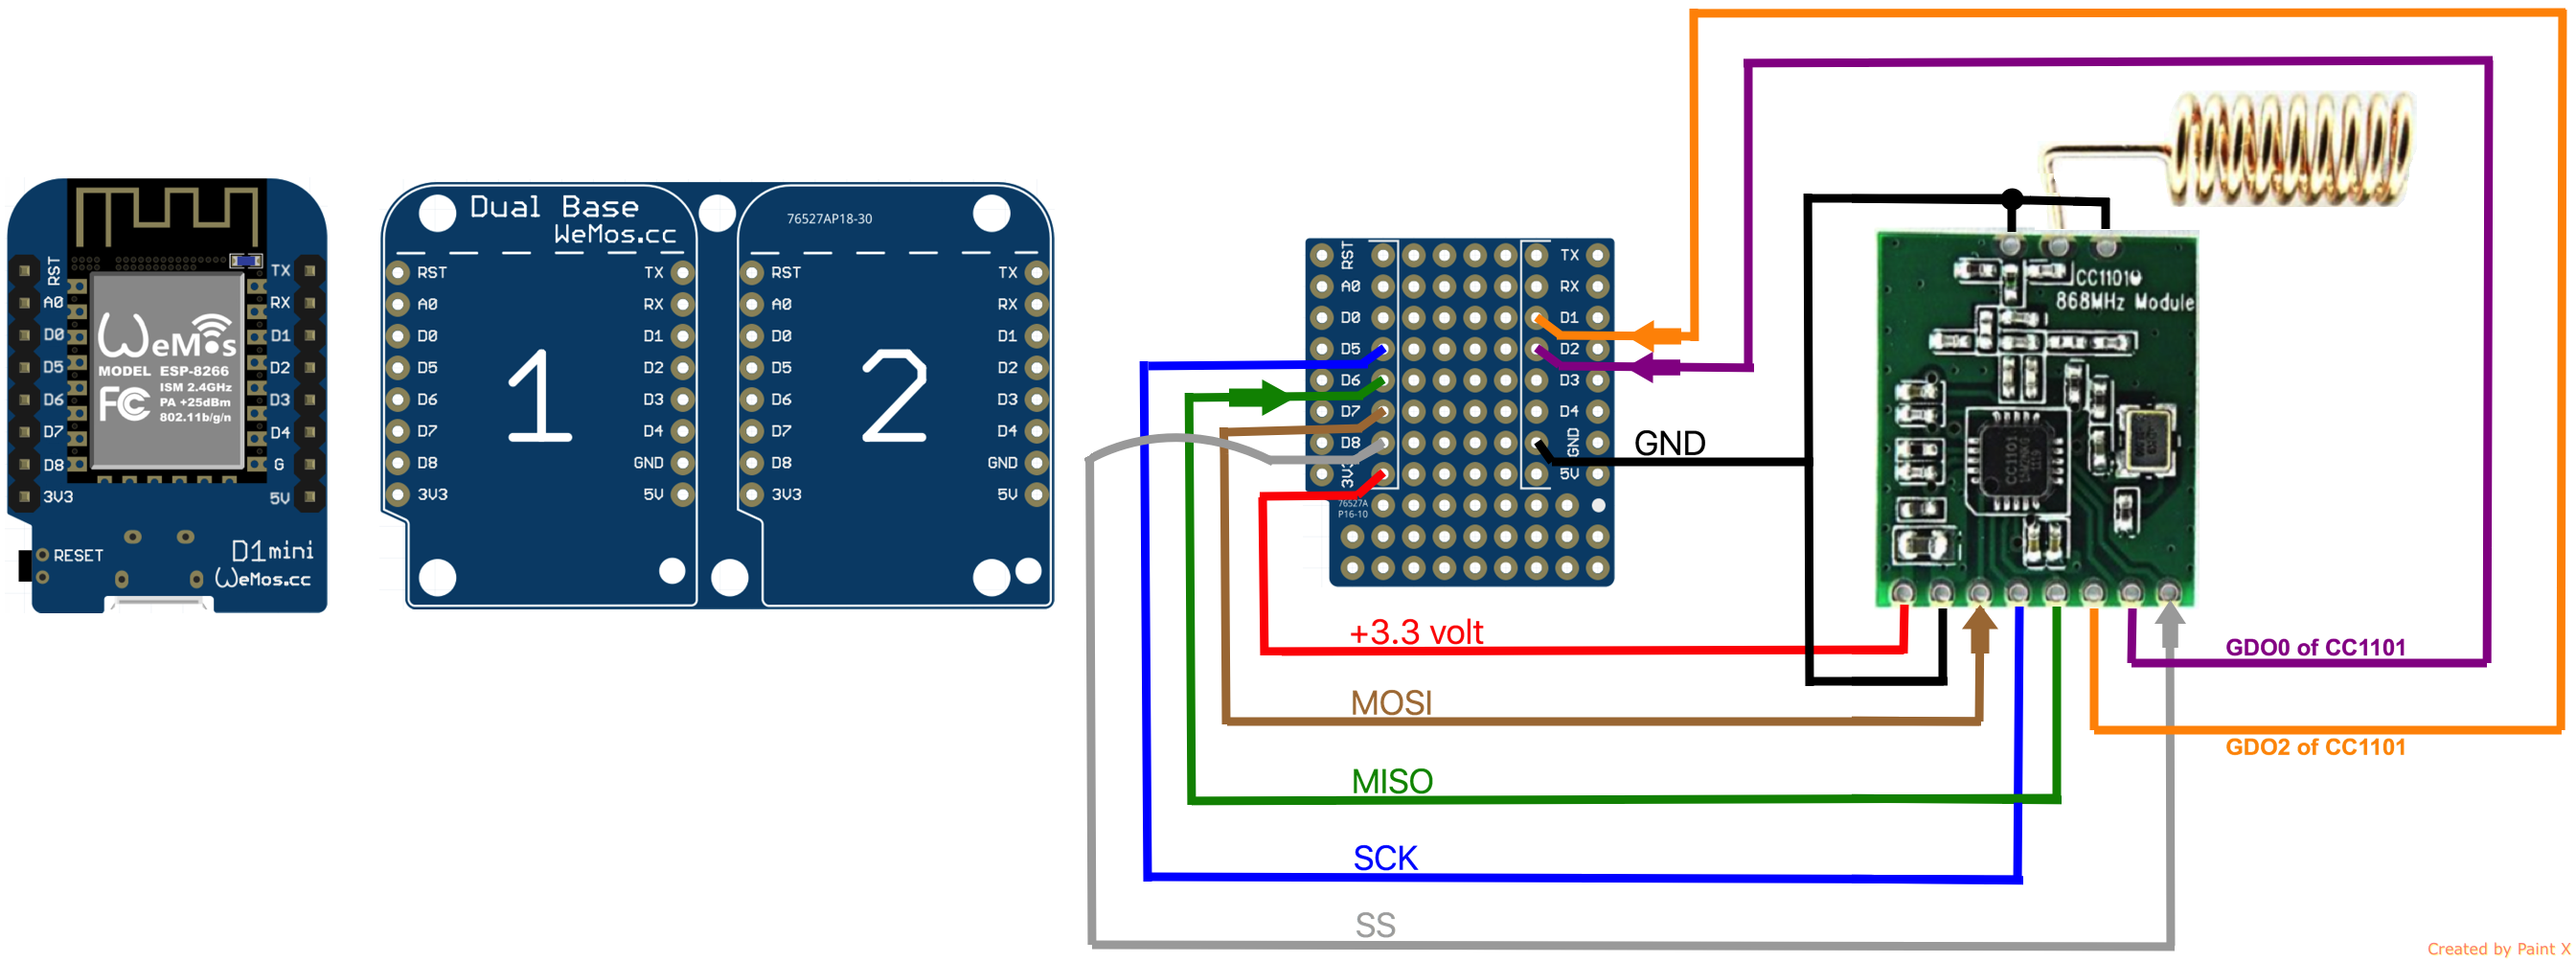 Schematics of WeMos D1 mini & CC1101 using a WeMos Proto board